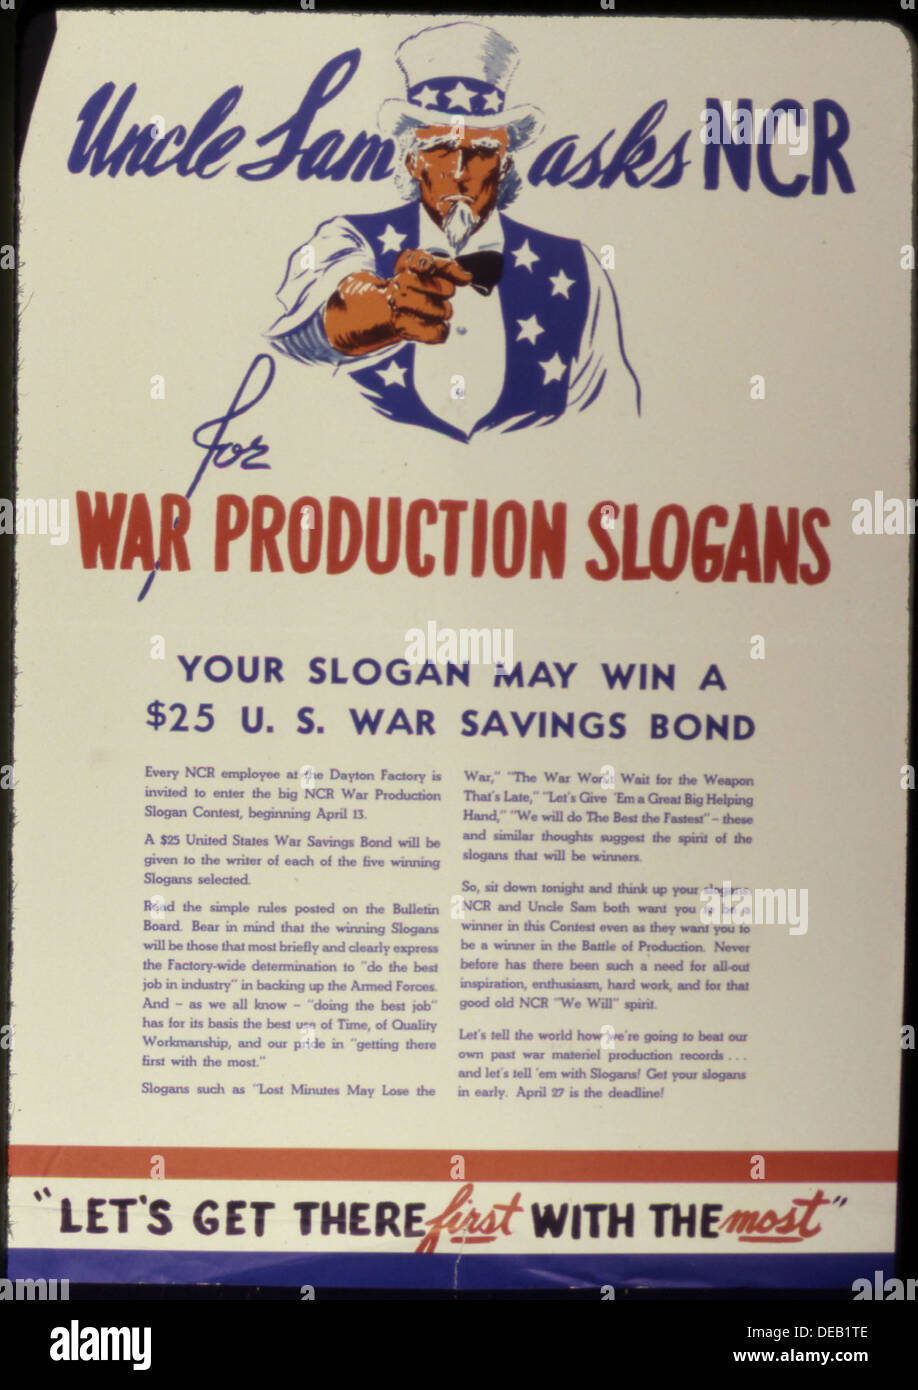 Uncle Sam asks NCR for War Production Slogans 534249 Stock Photo